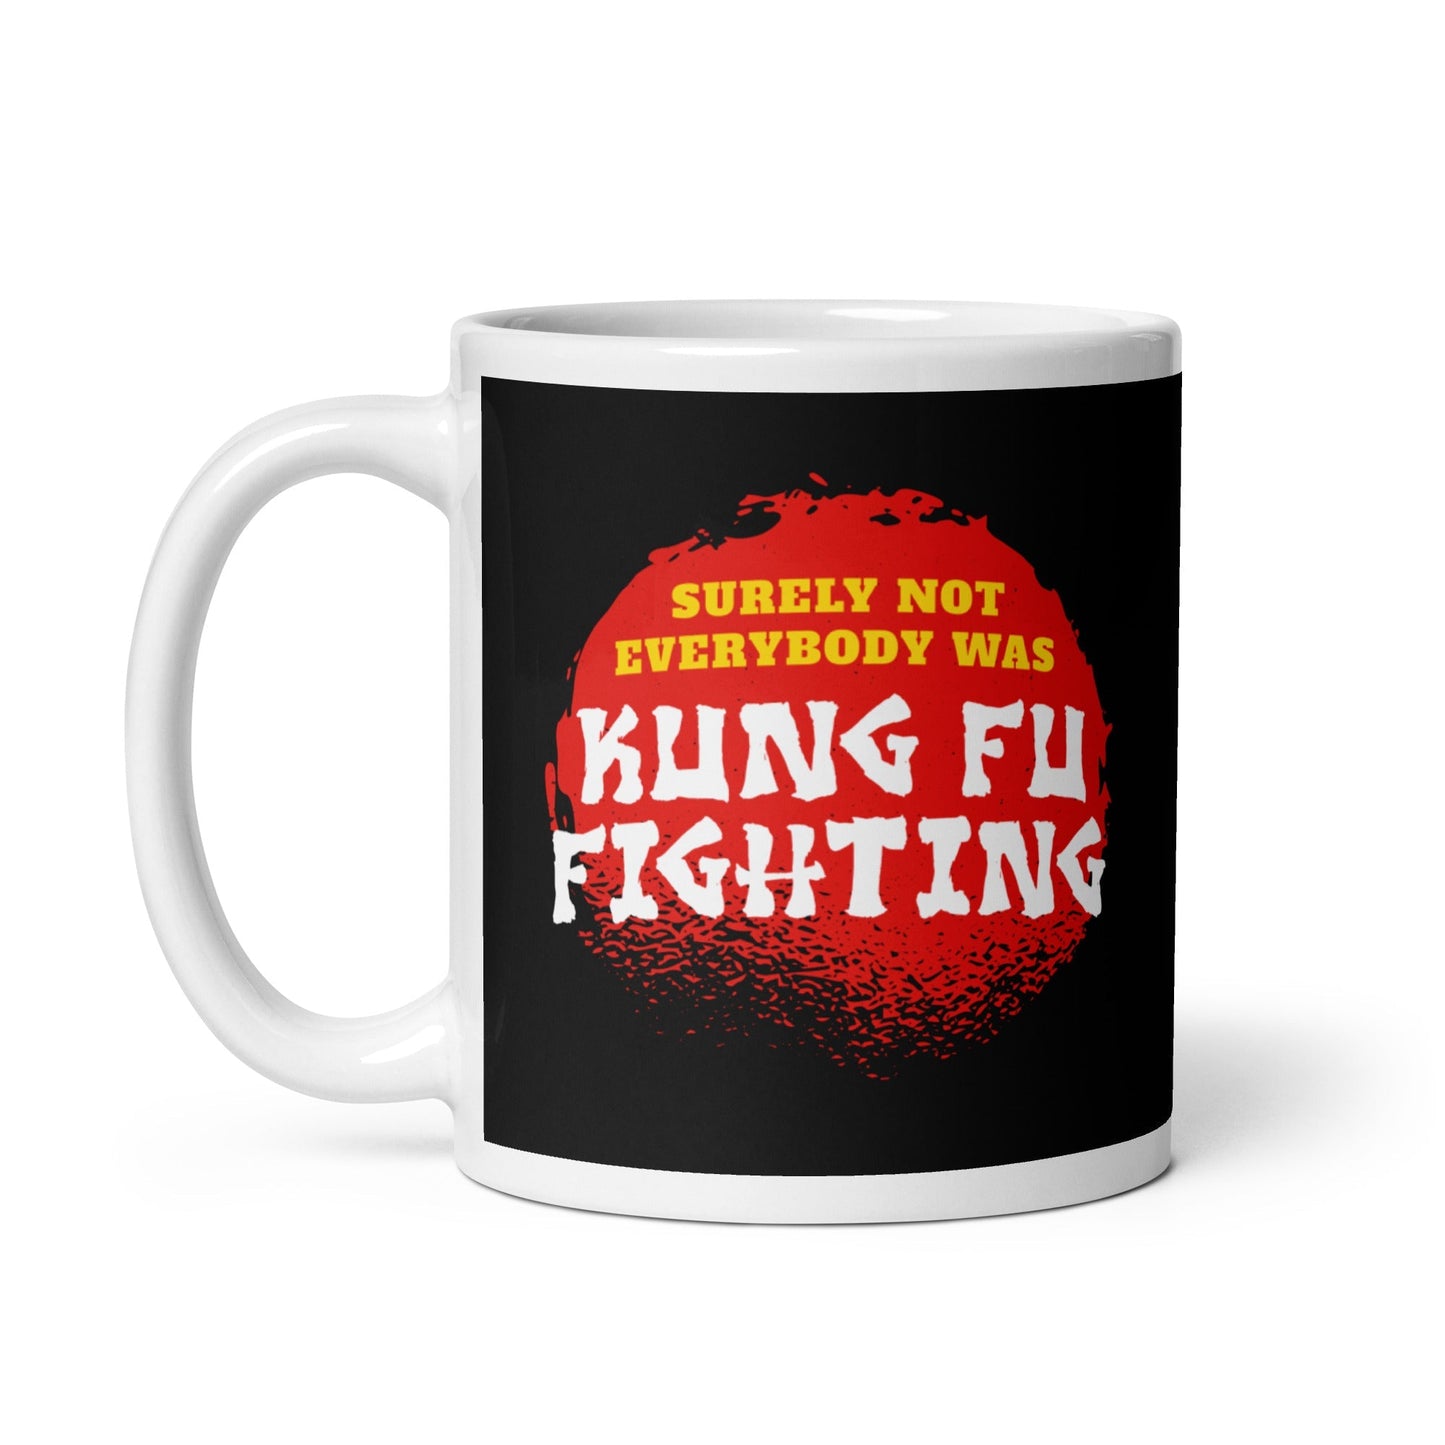 Surely not everybody was Kung Fu fighting - Mug